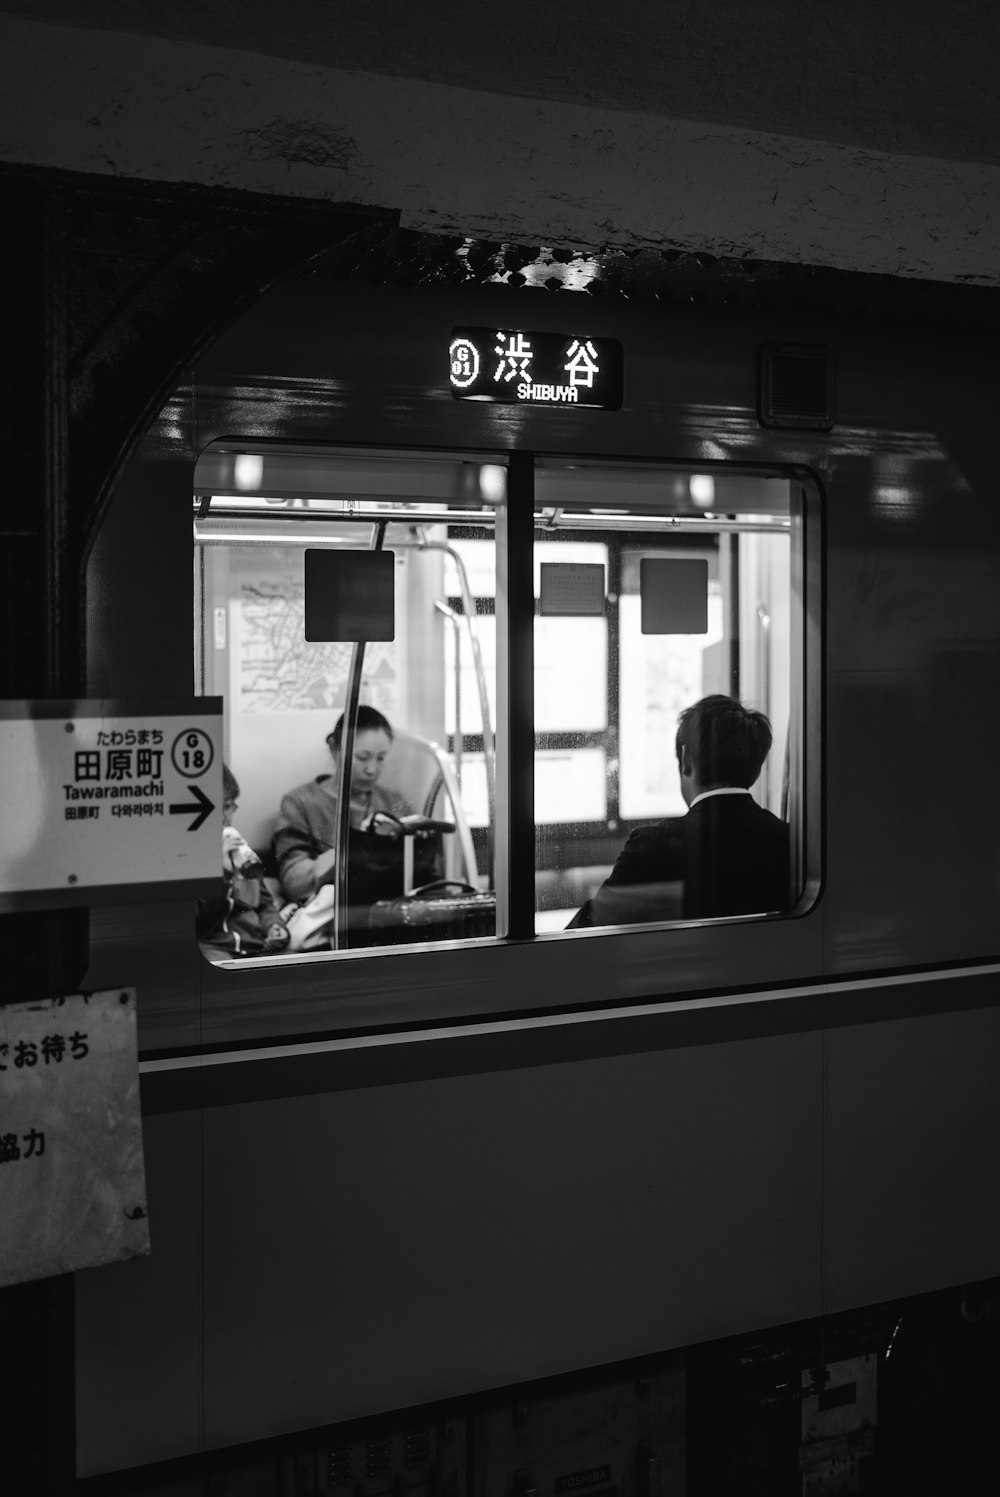 foto in scala di grigi di due persone sedute in treno